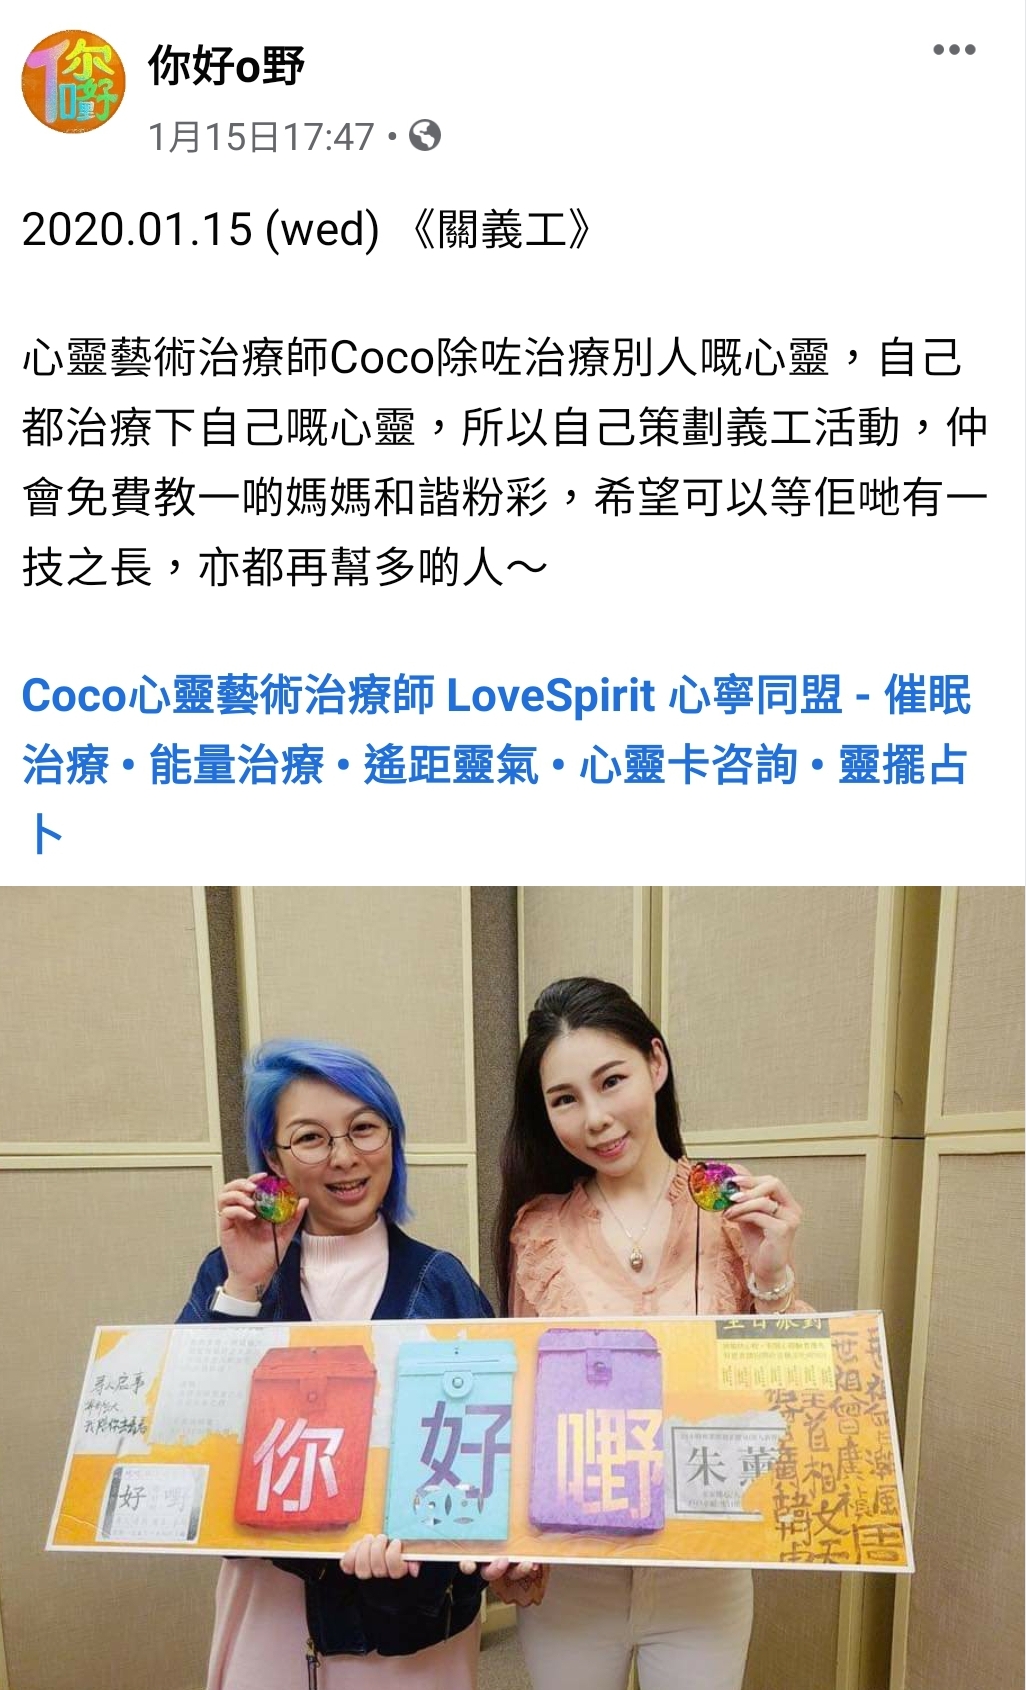 Coco • LoveSpirit  風水師傳媒報導: 商業電台 [[朱薰_你好嘢]] 邀請Coco安思叡心靈繪畫導師